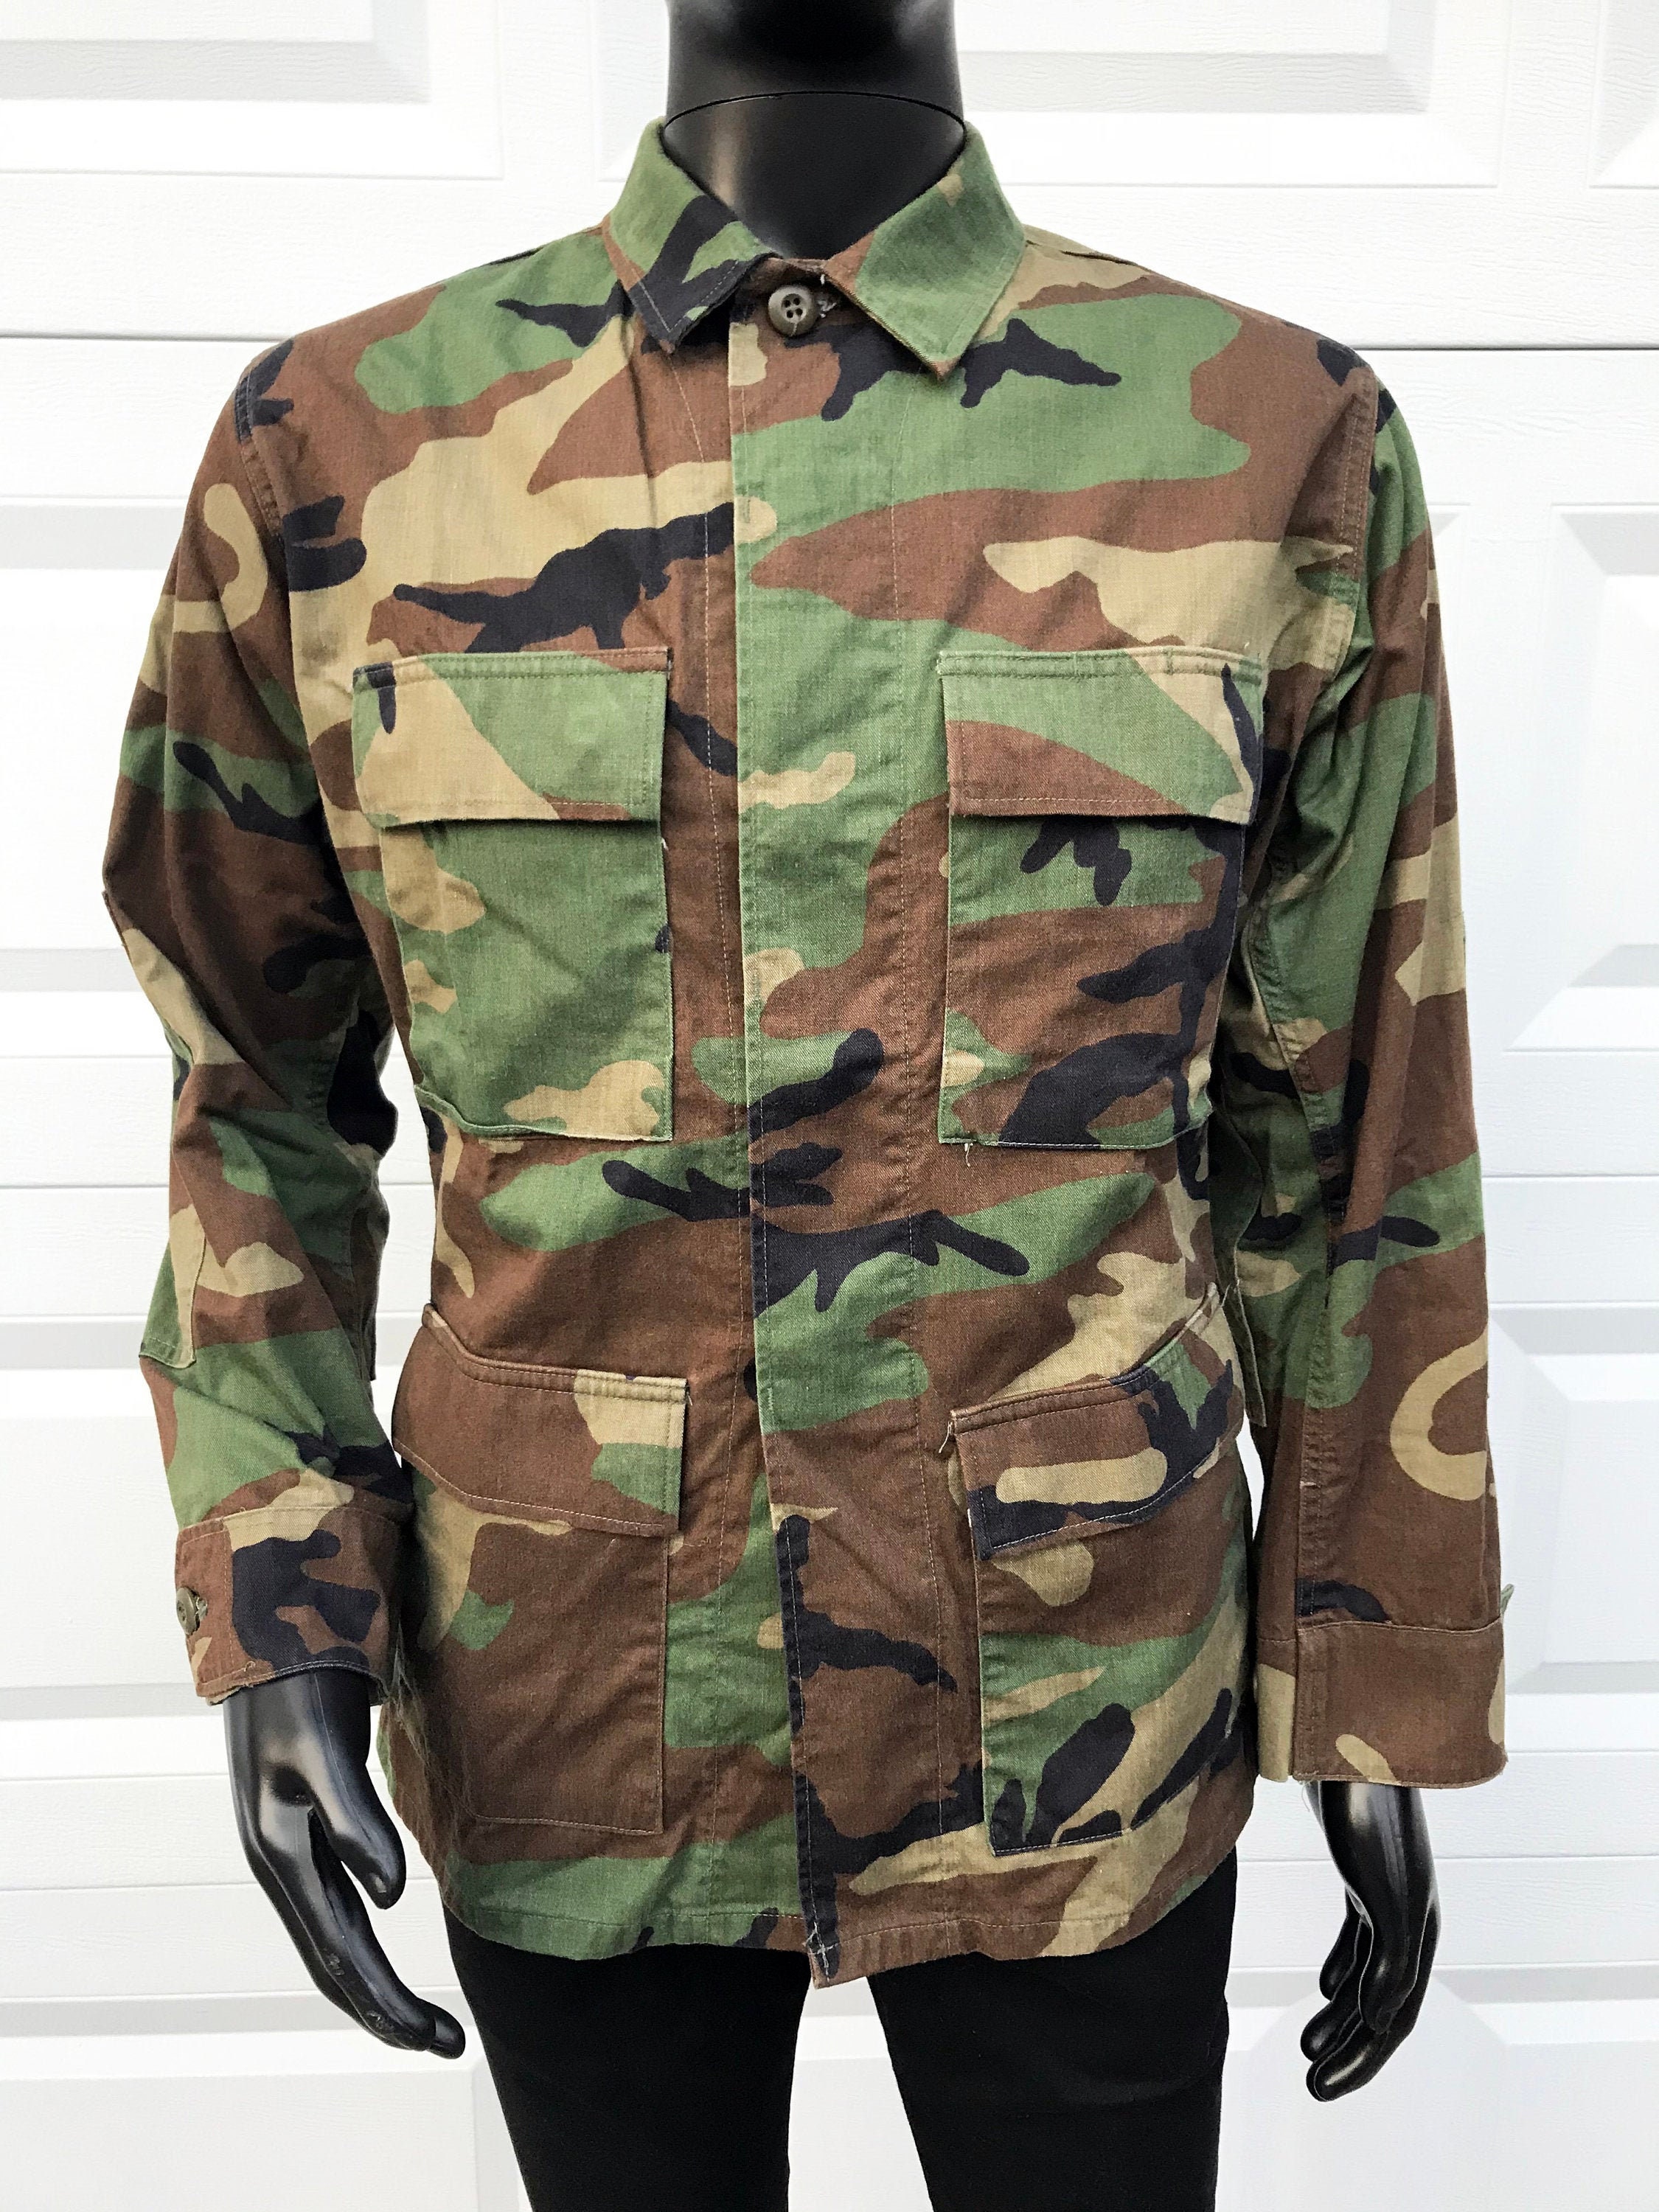 BDU camouflage army jacket Johnny Deep